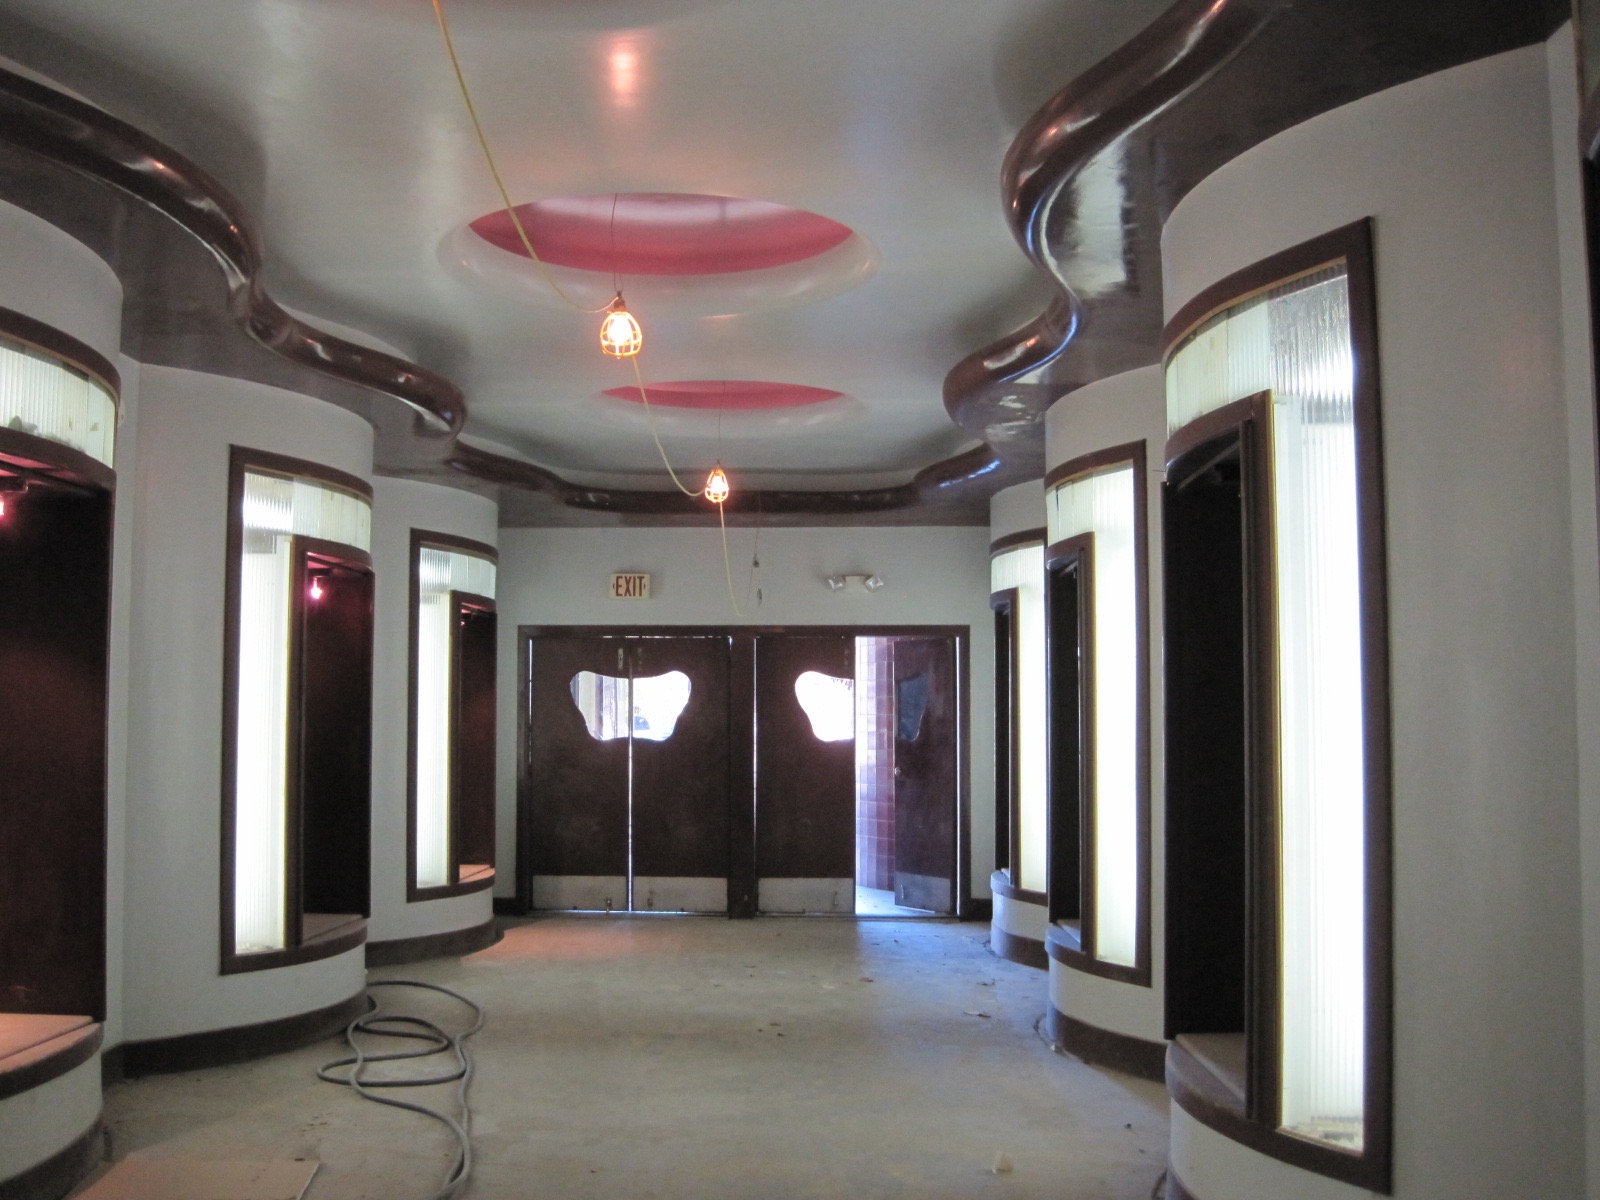 Arcadia's Art Deco lobby